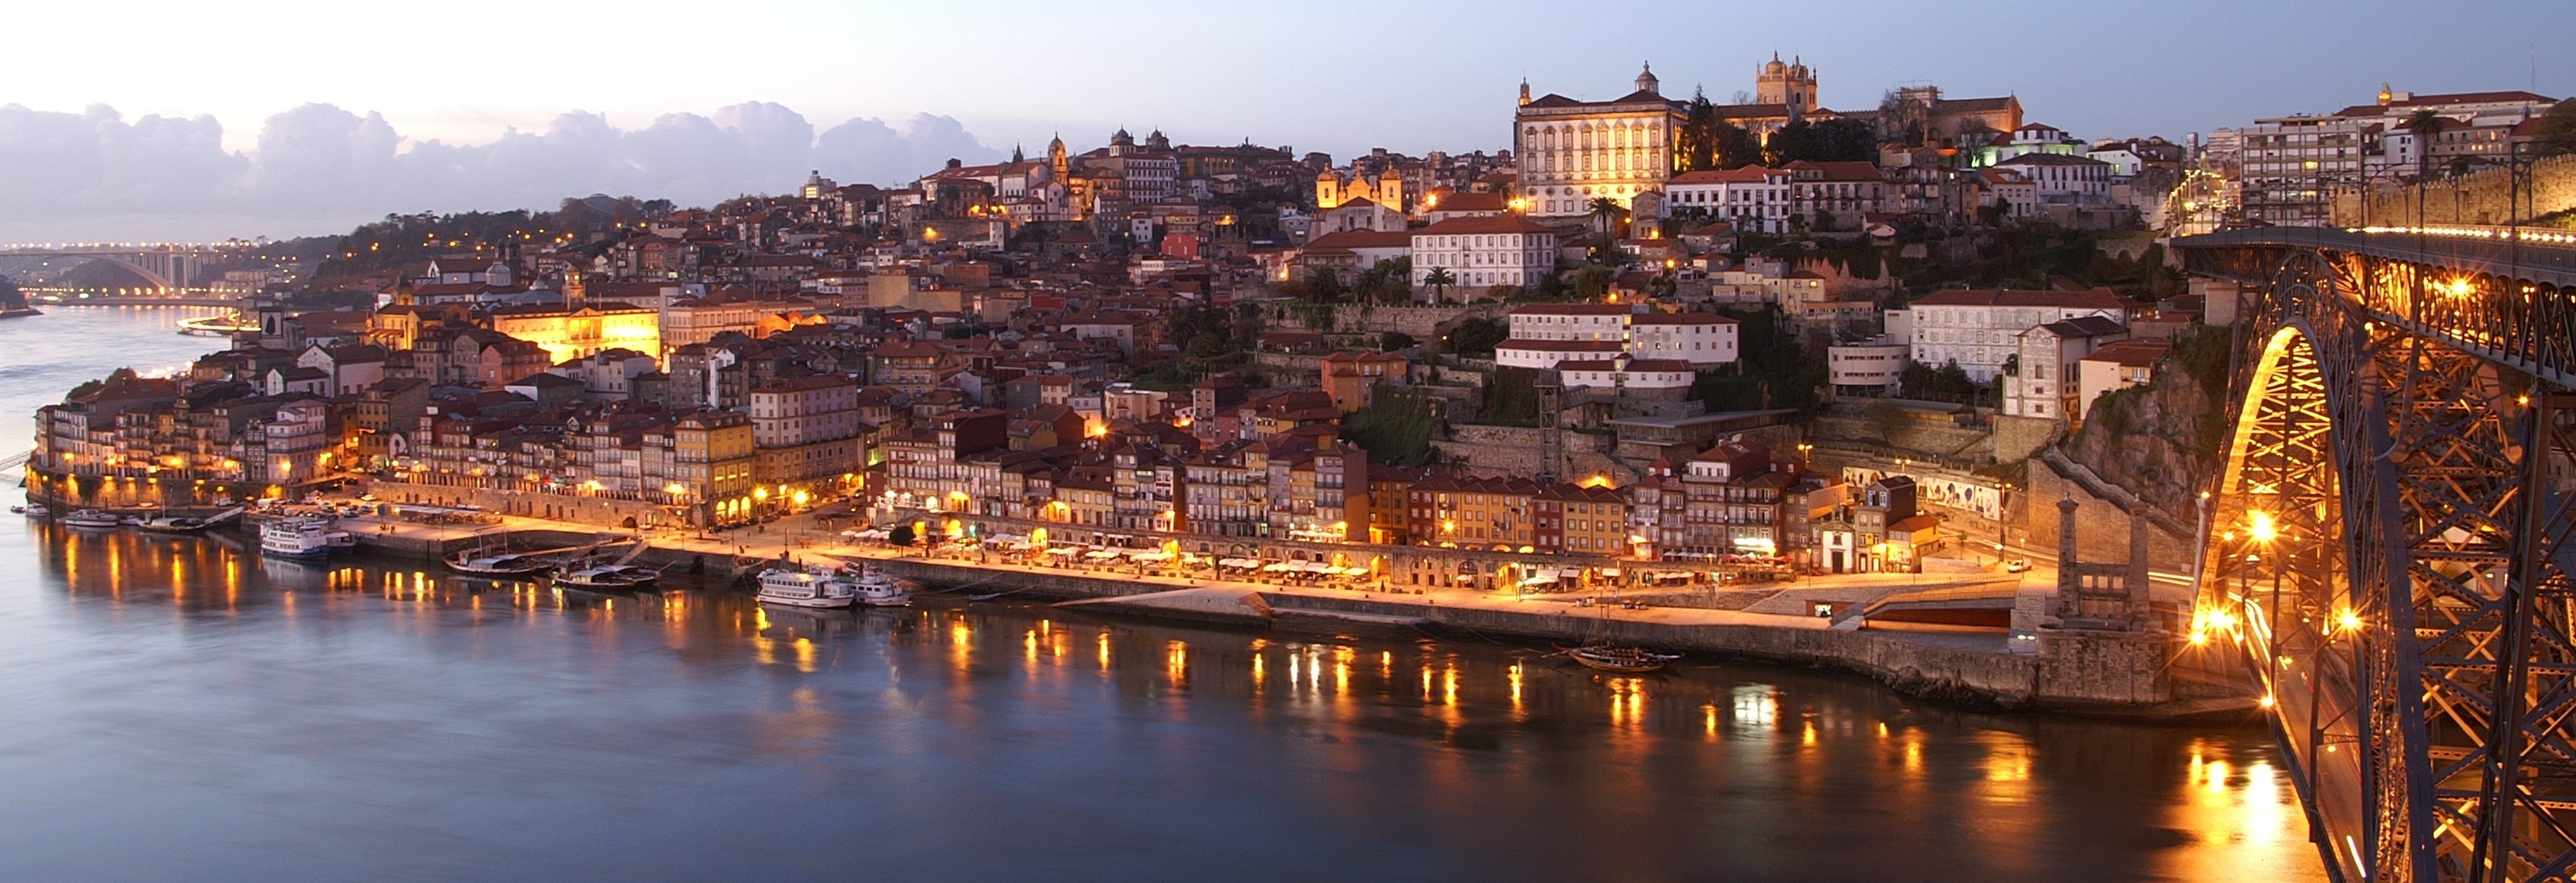 Porto Night Lights Landscape 2977x1021